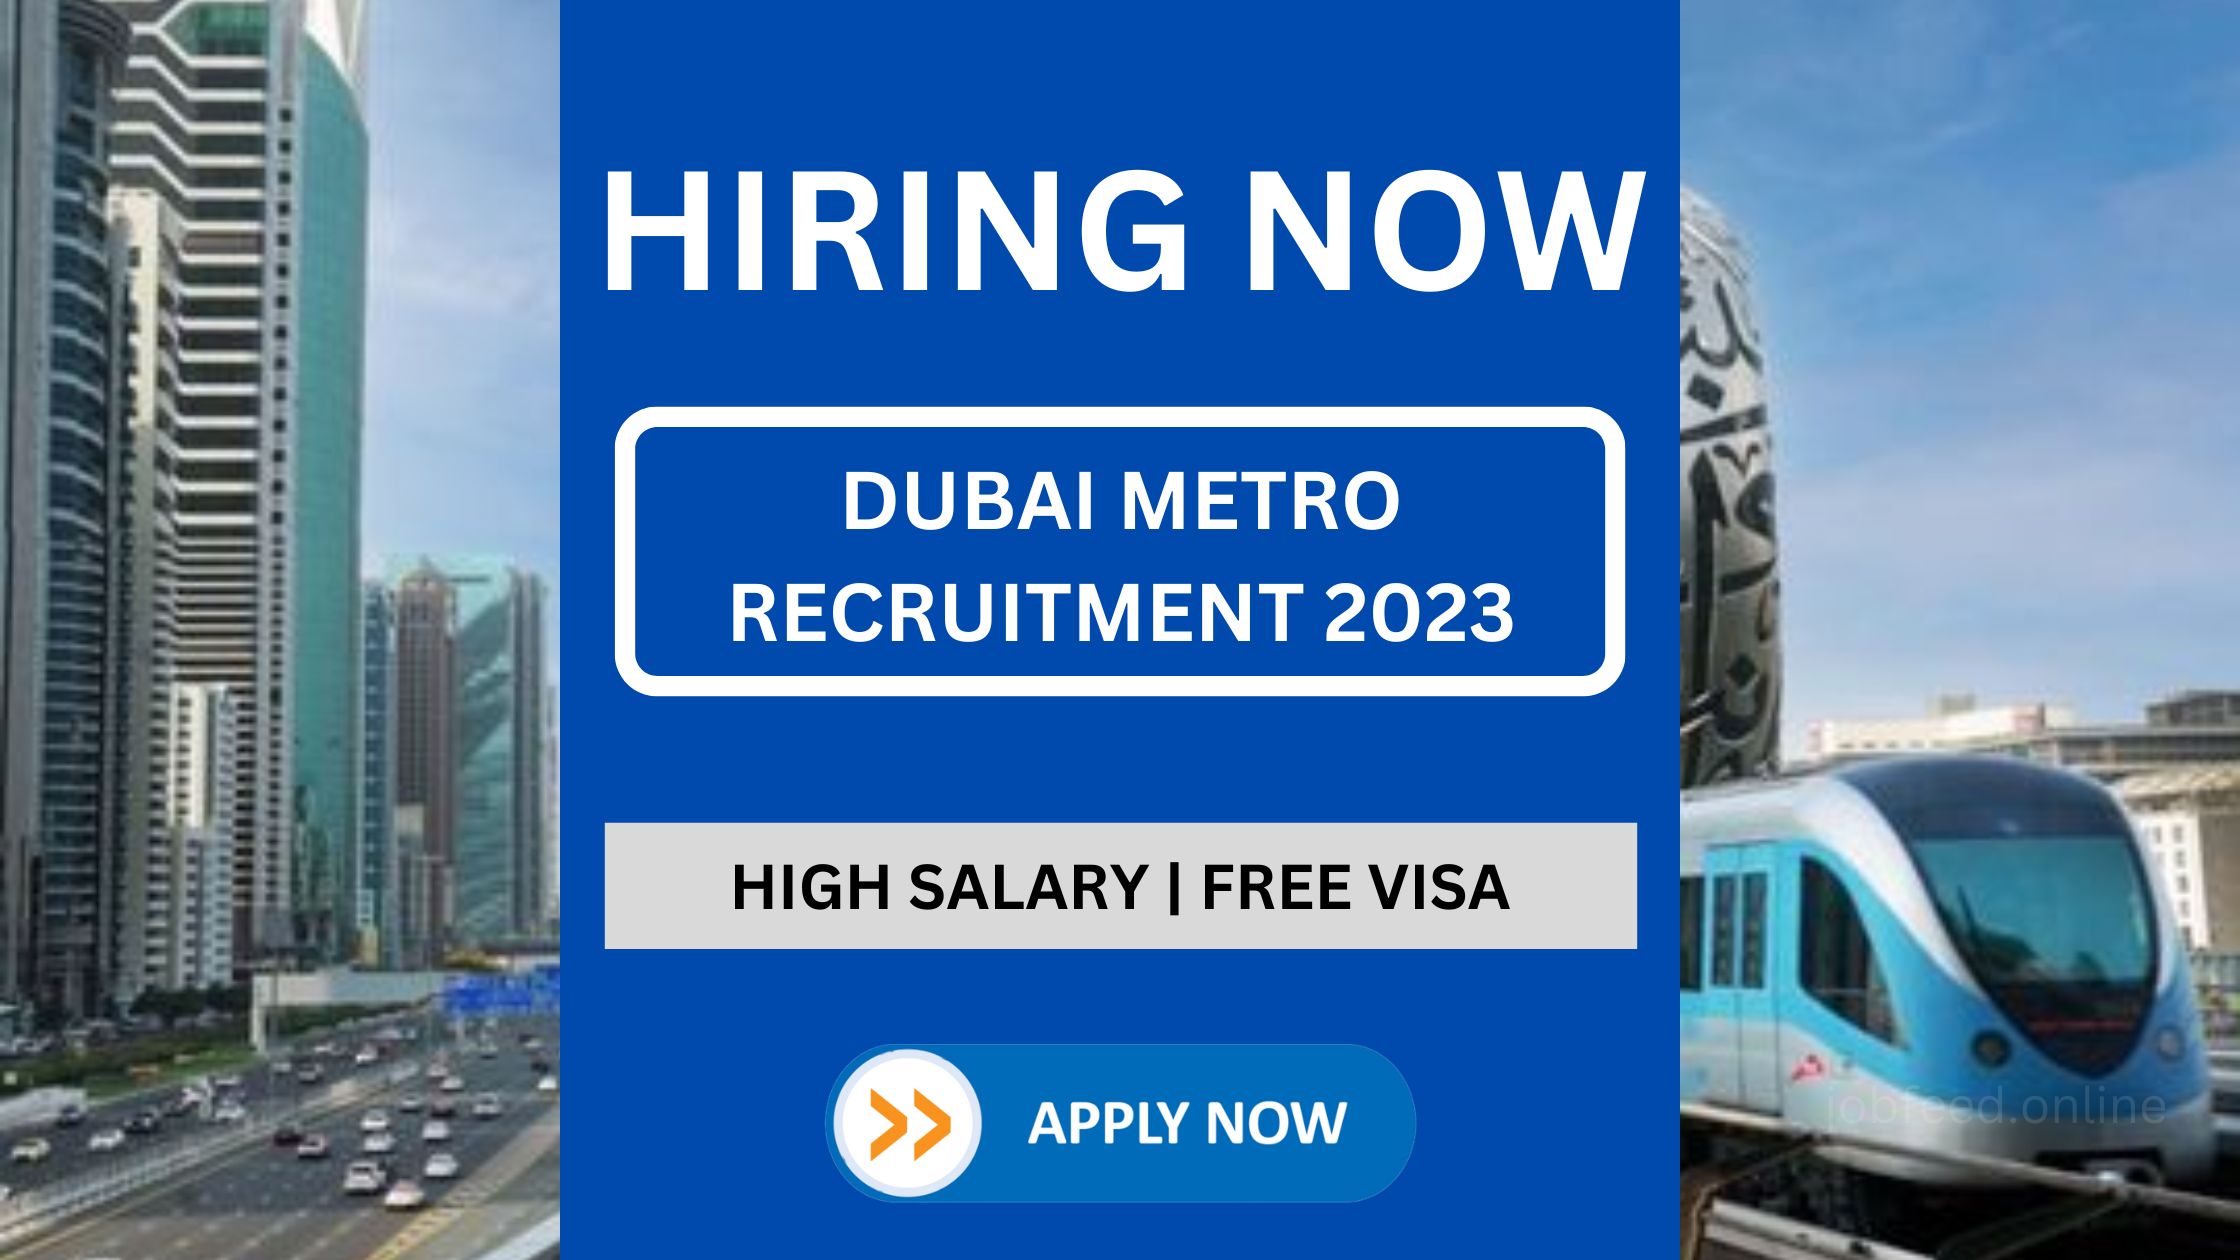 Dubai Metro Recruitment 2023: List of Vacancies, Check How to Apply